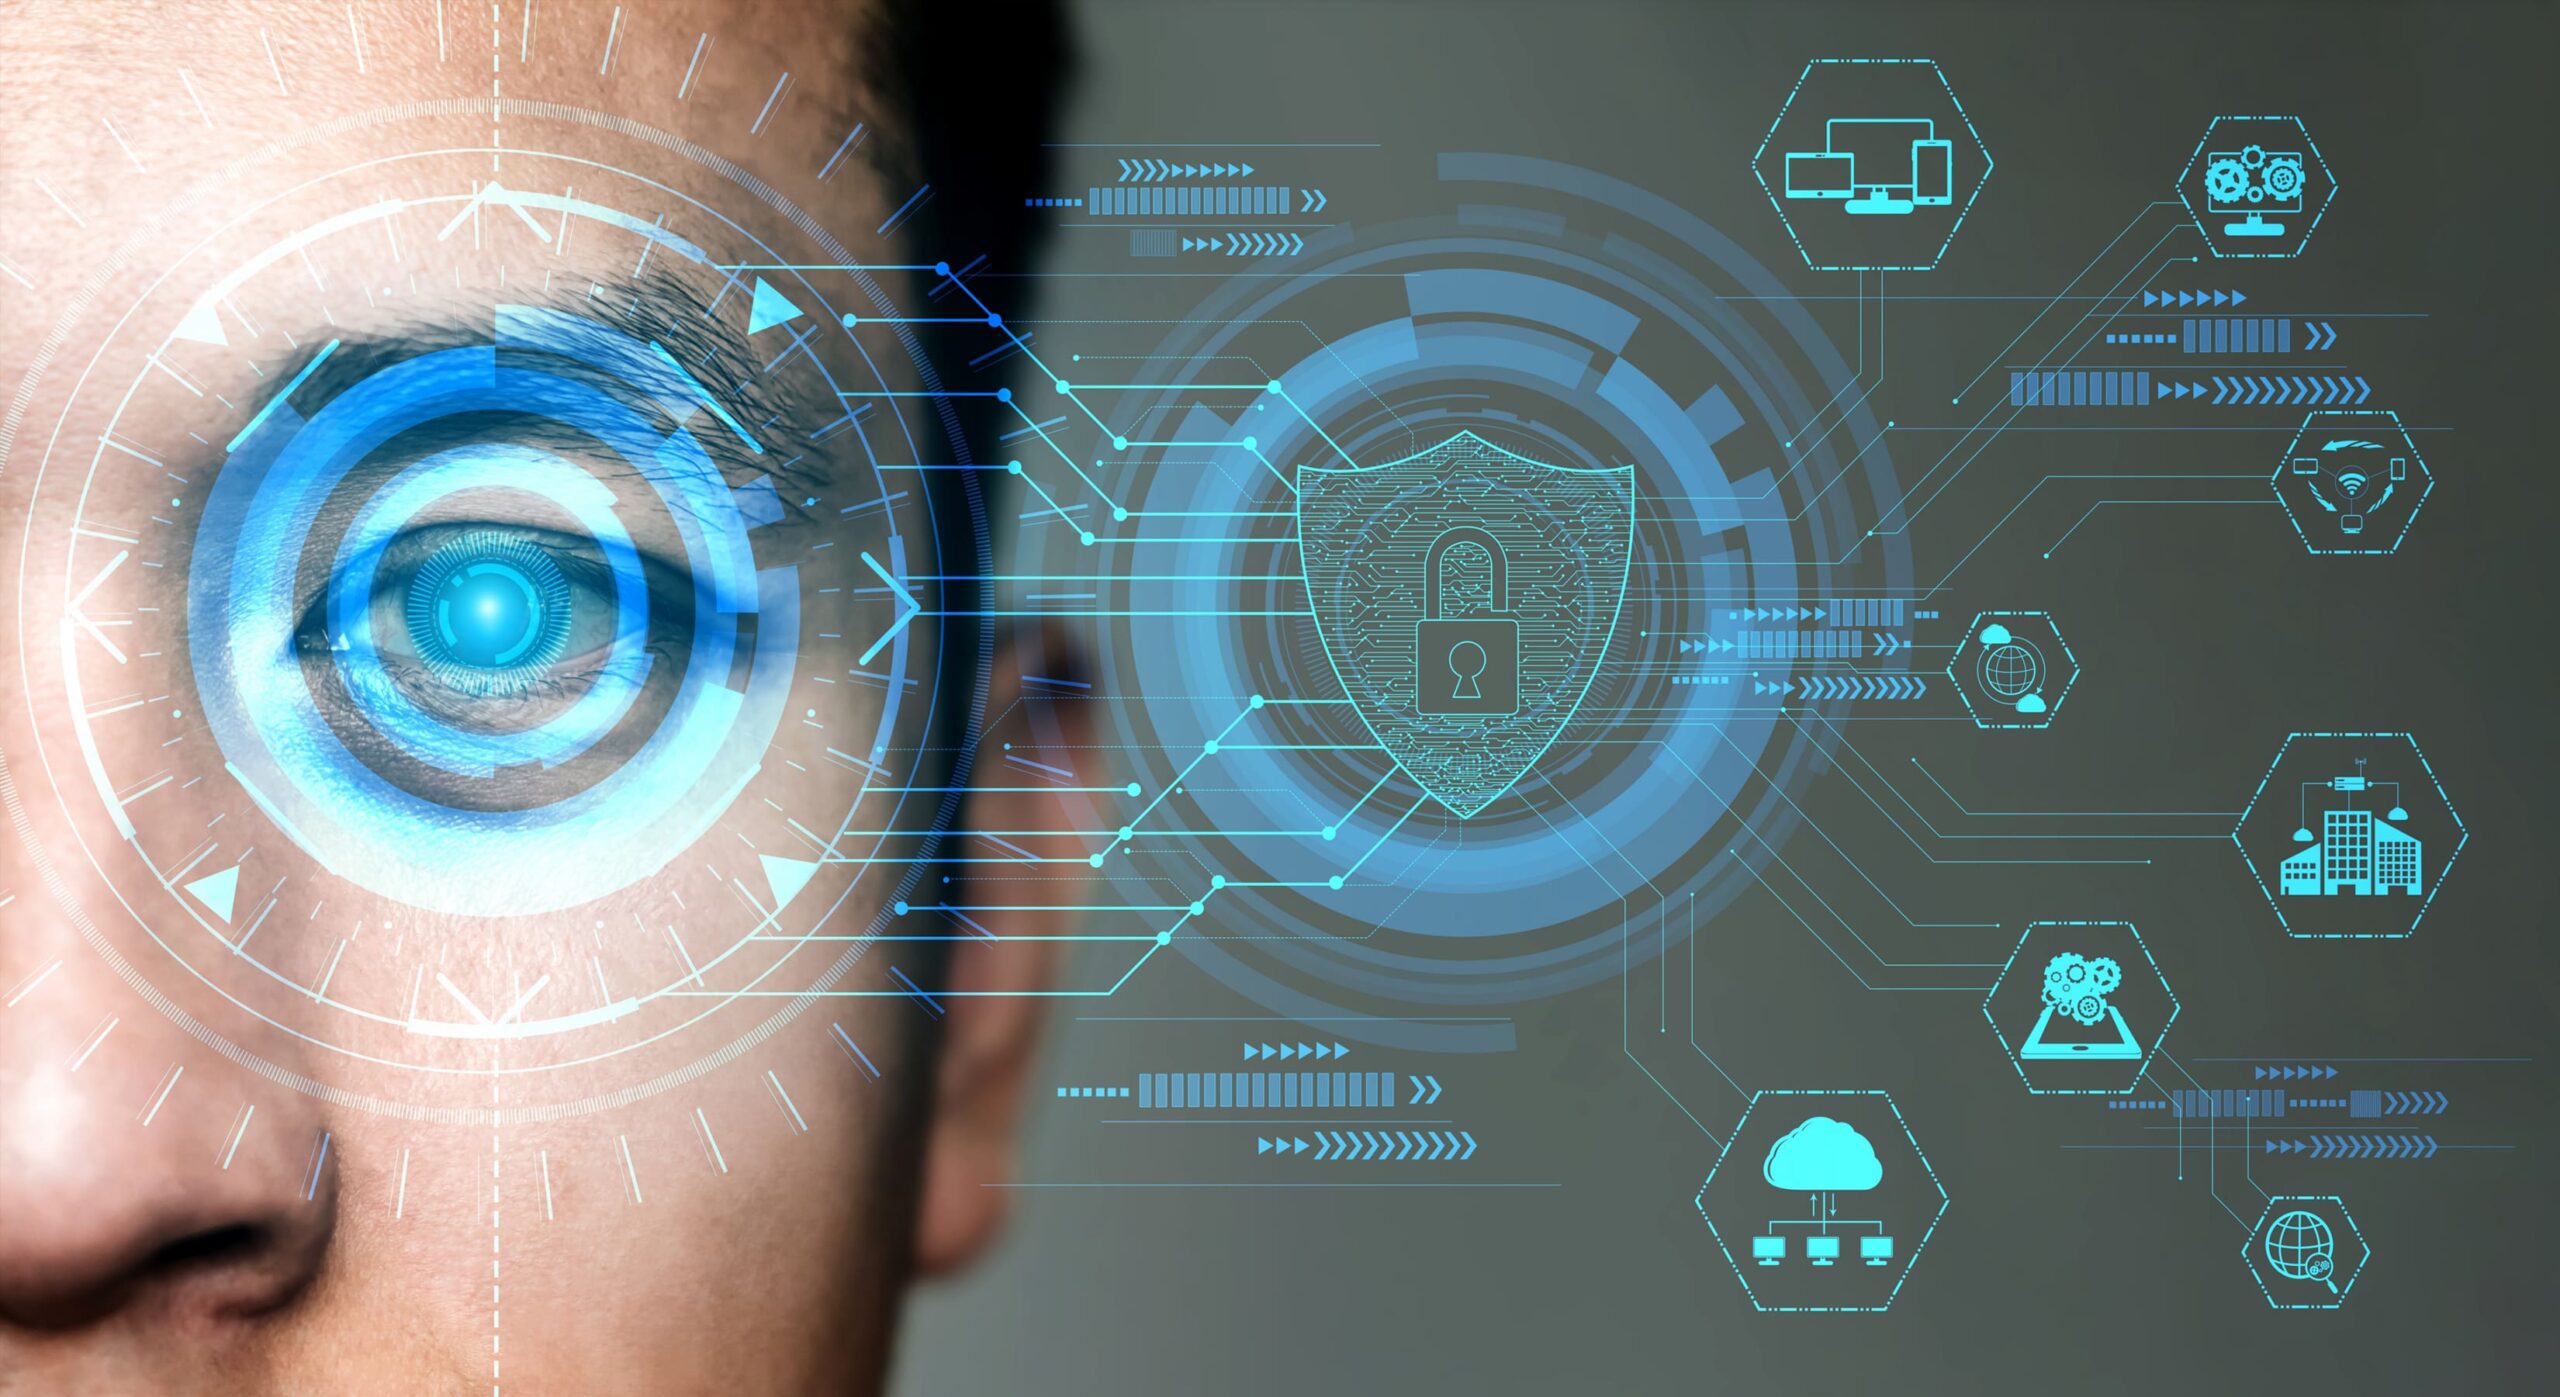 Future security data by biometrics eye scanning